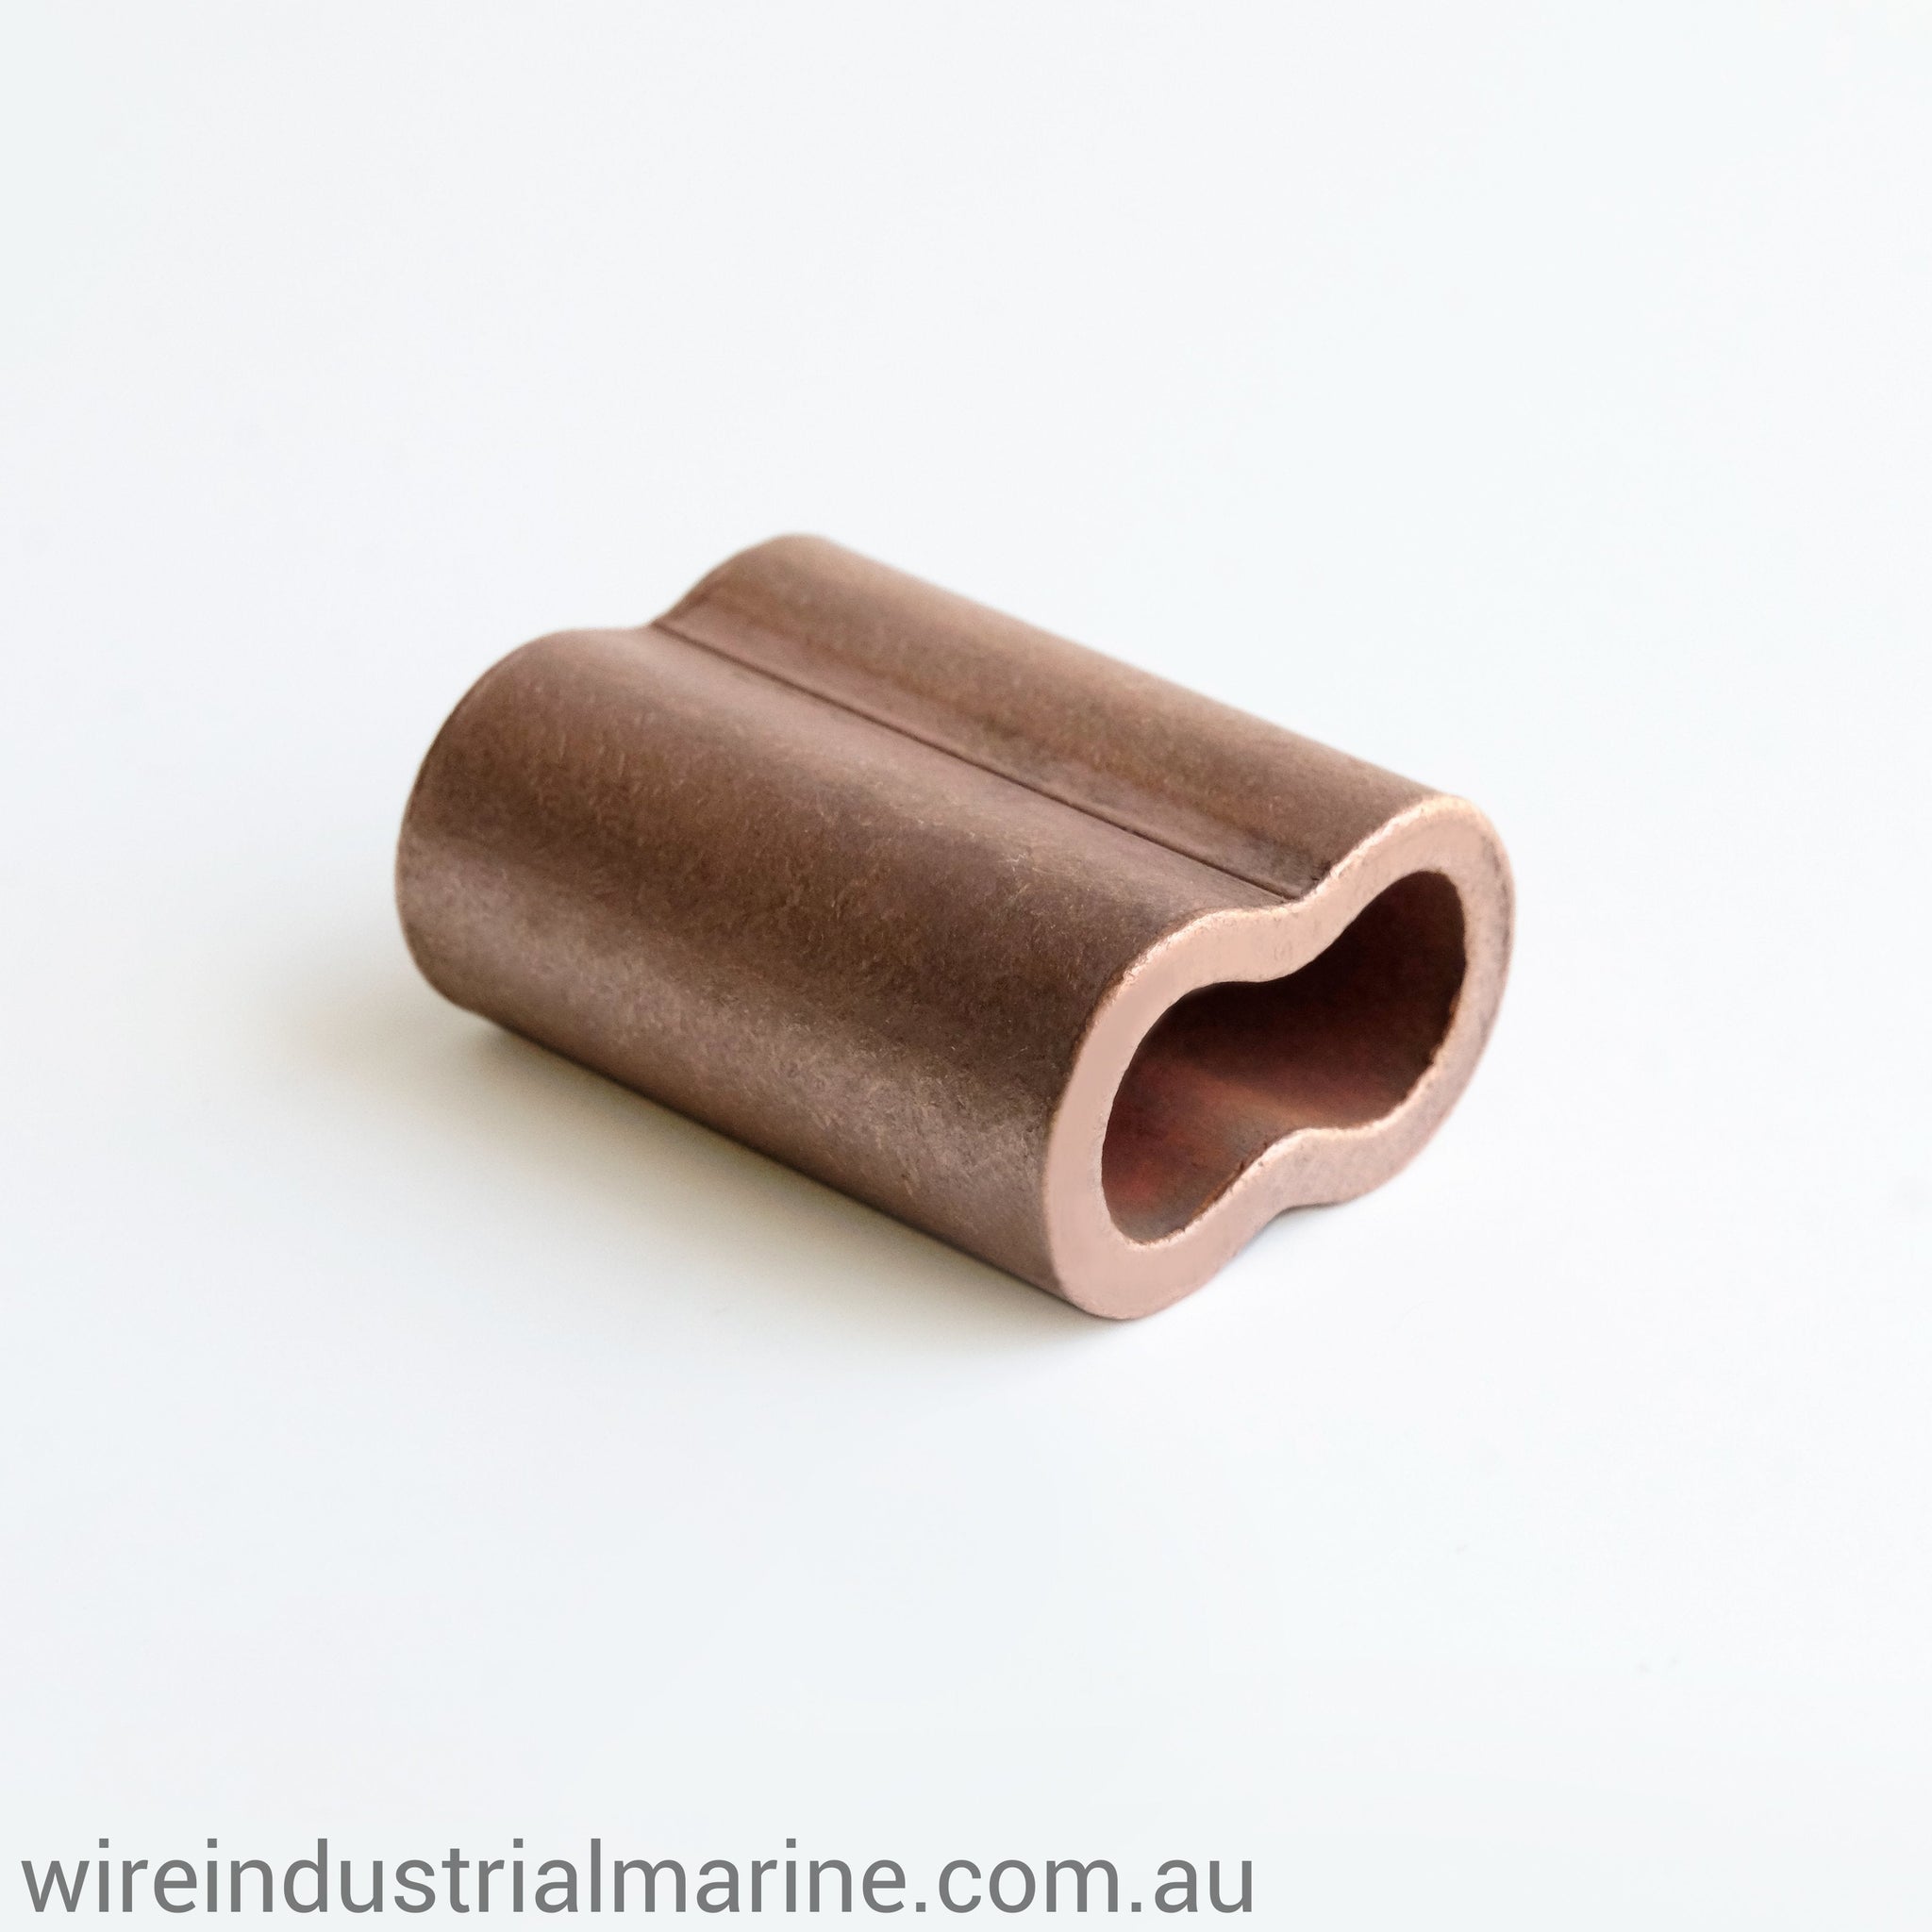 6.4mm Copper swage for wire rope-CS-6.4-wireindustrialmarine